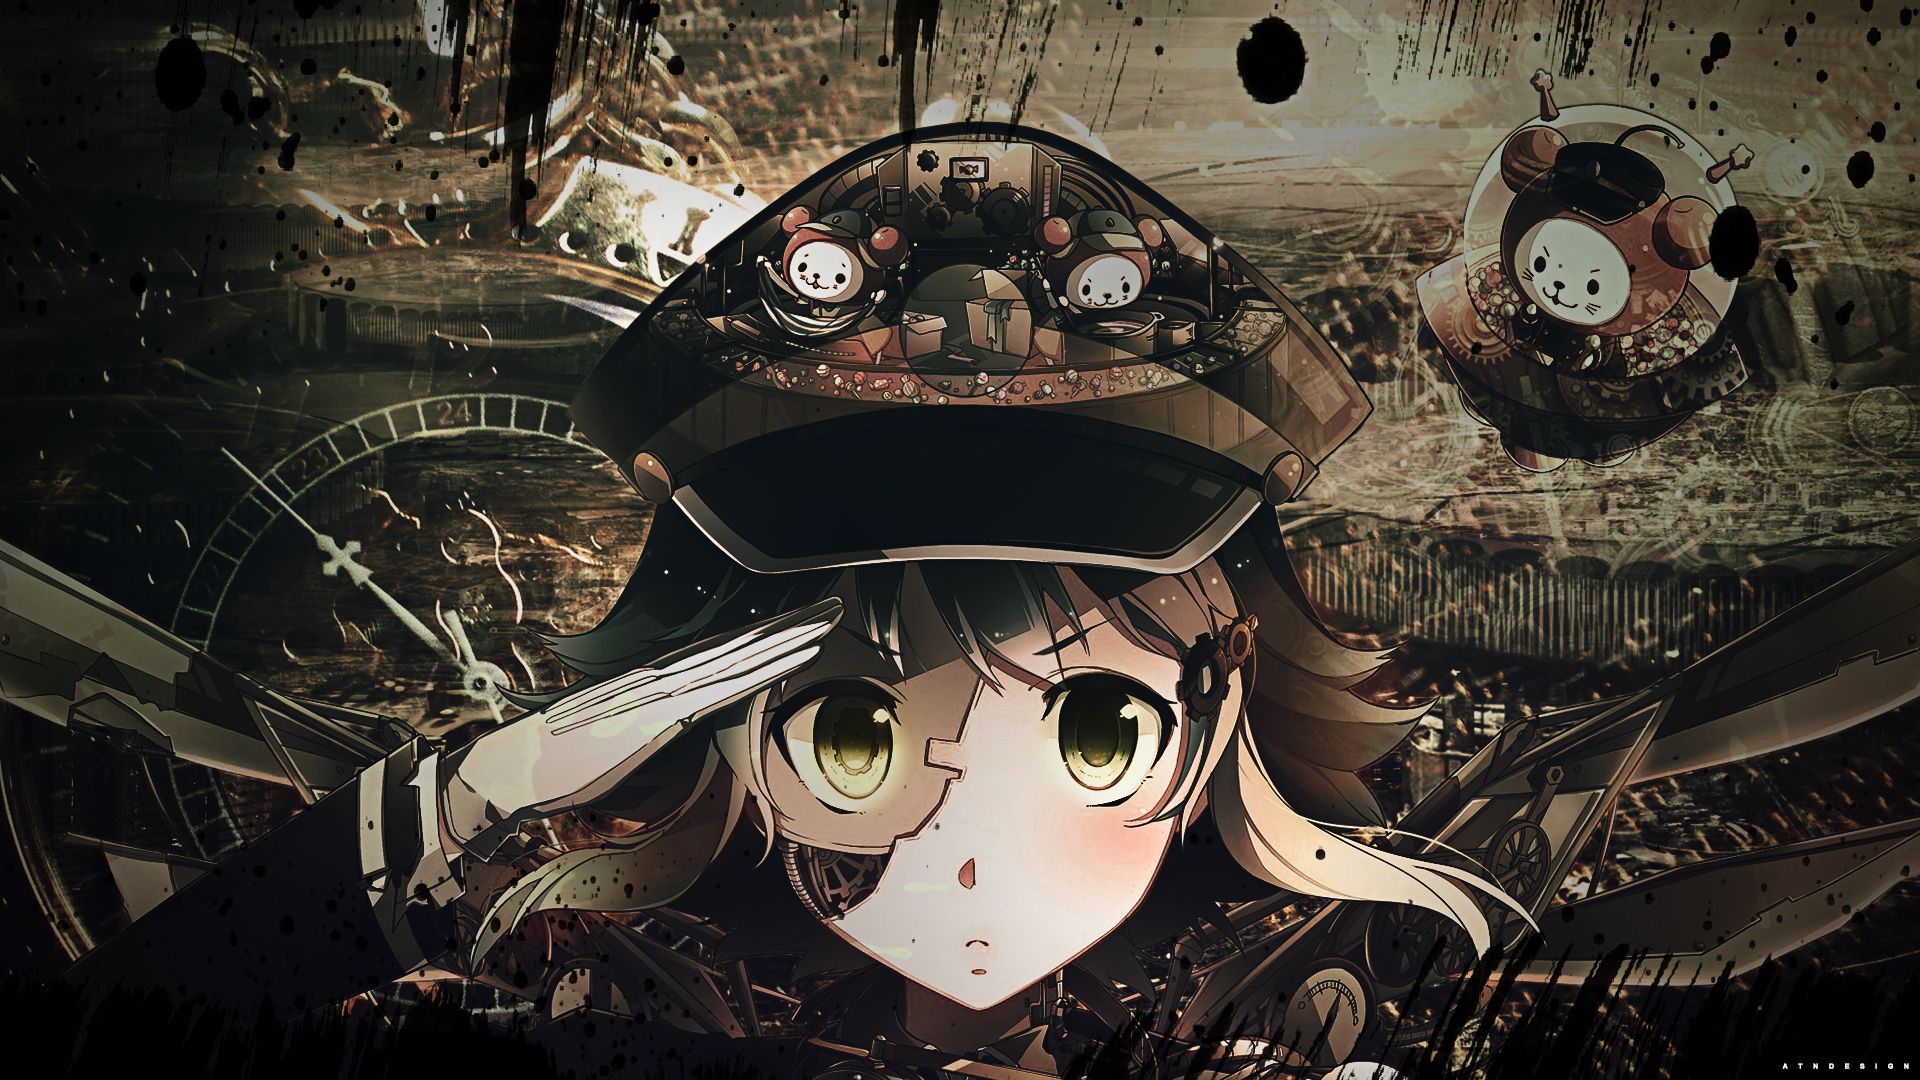 Anime steampunk girl 6 by NeuroMage on DeviantArt